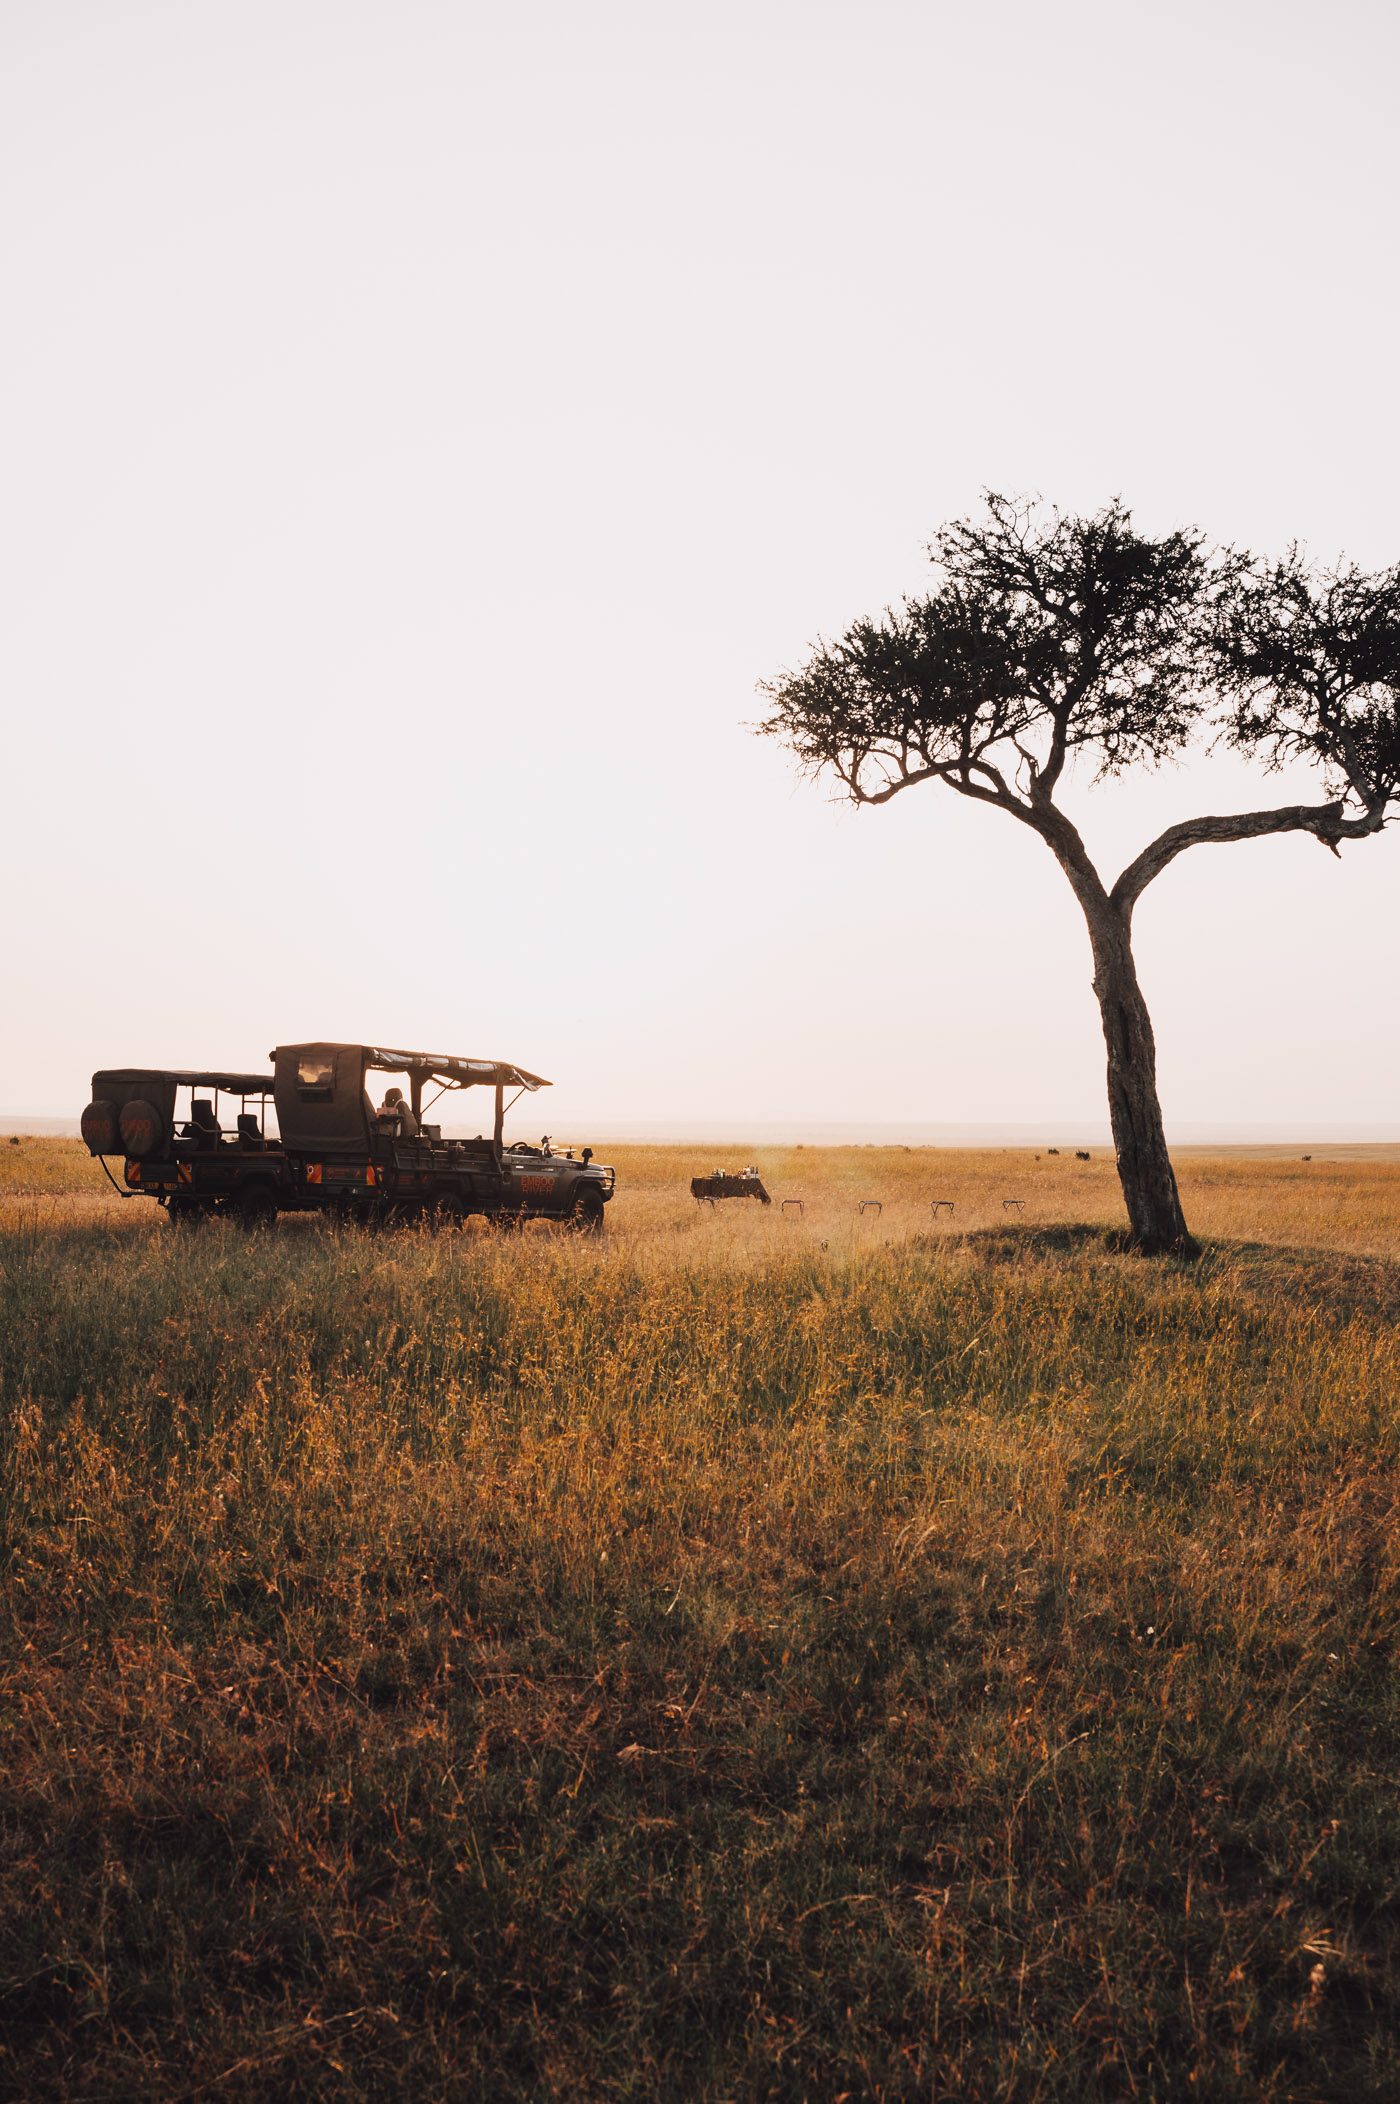 Eco luxury safari in Kenya's Maasai Mara with Emboo River Camp and their electric safari vehicles